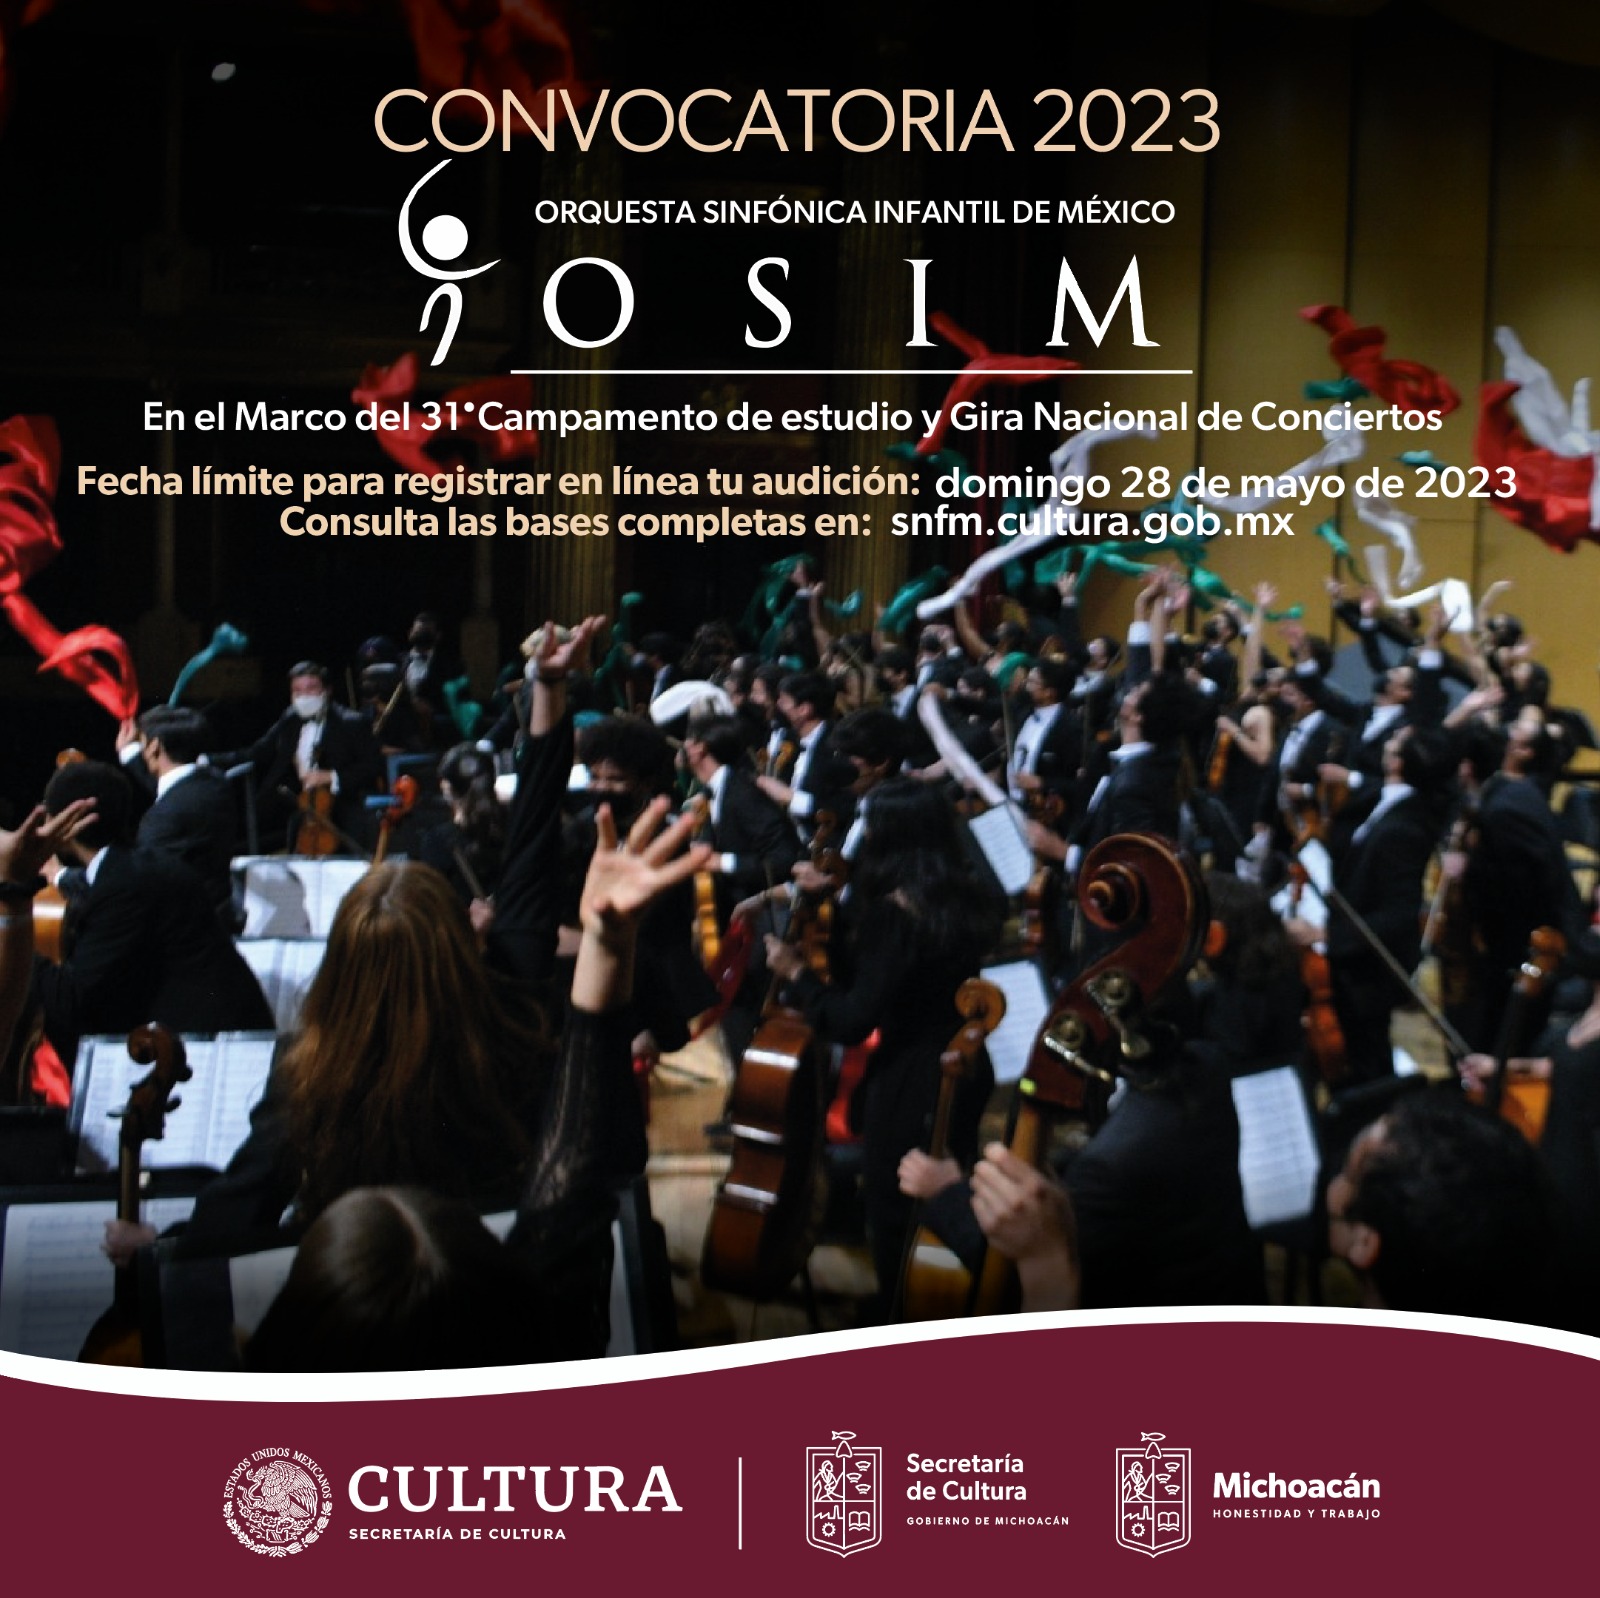 Convocan a aplicar para la Orquesta Sinfónica Infantil de México